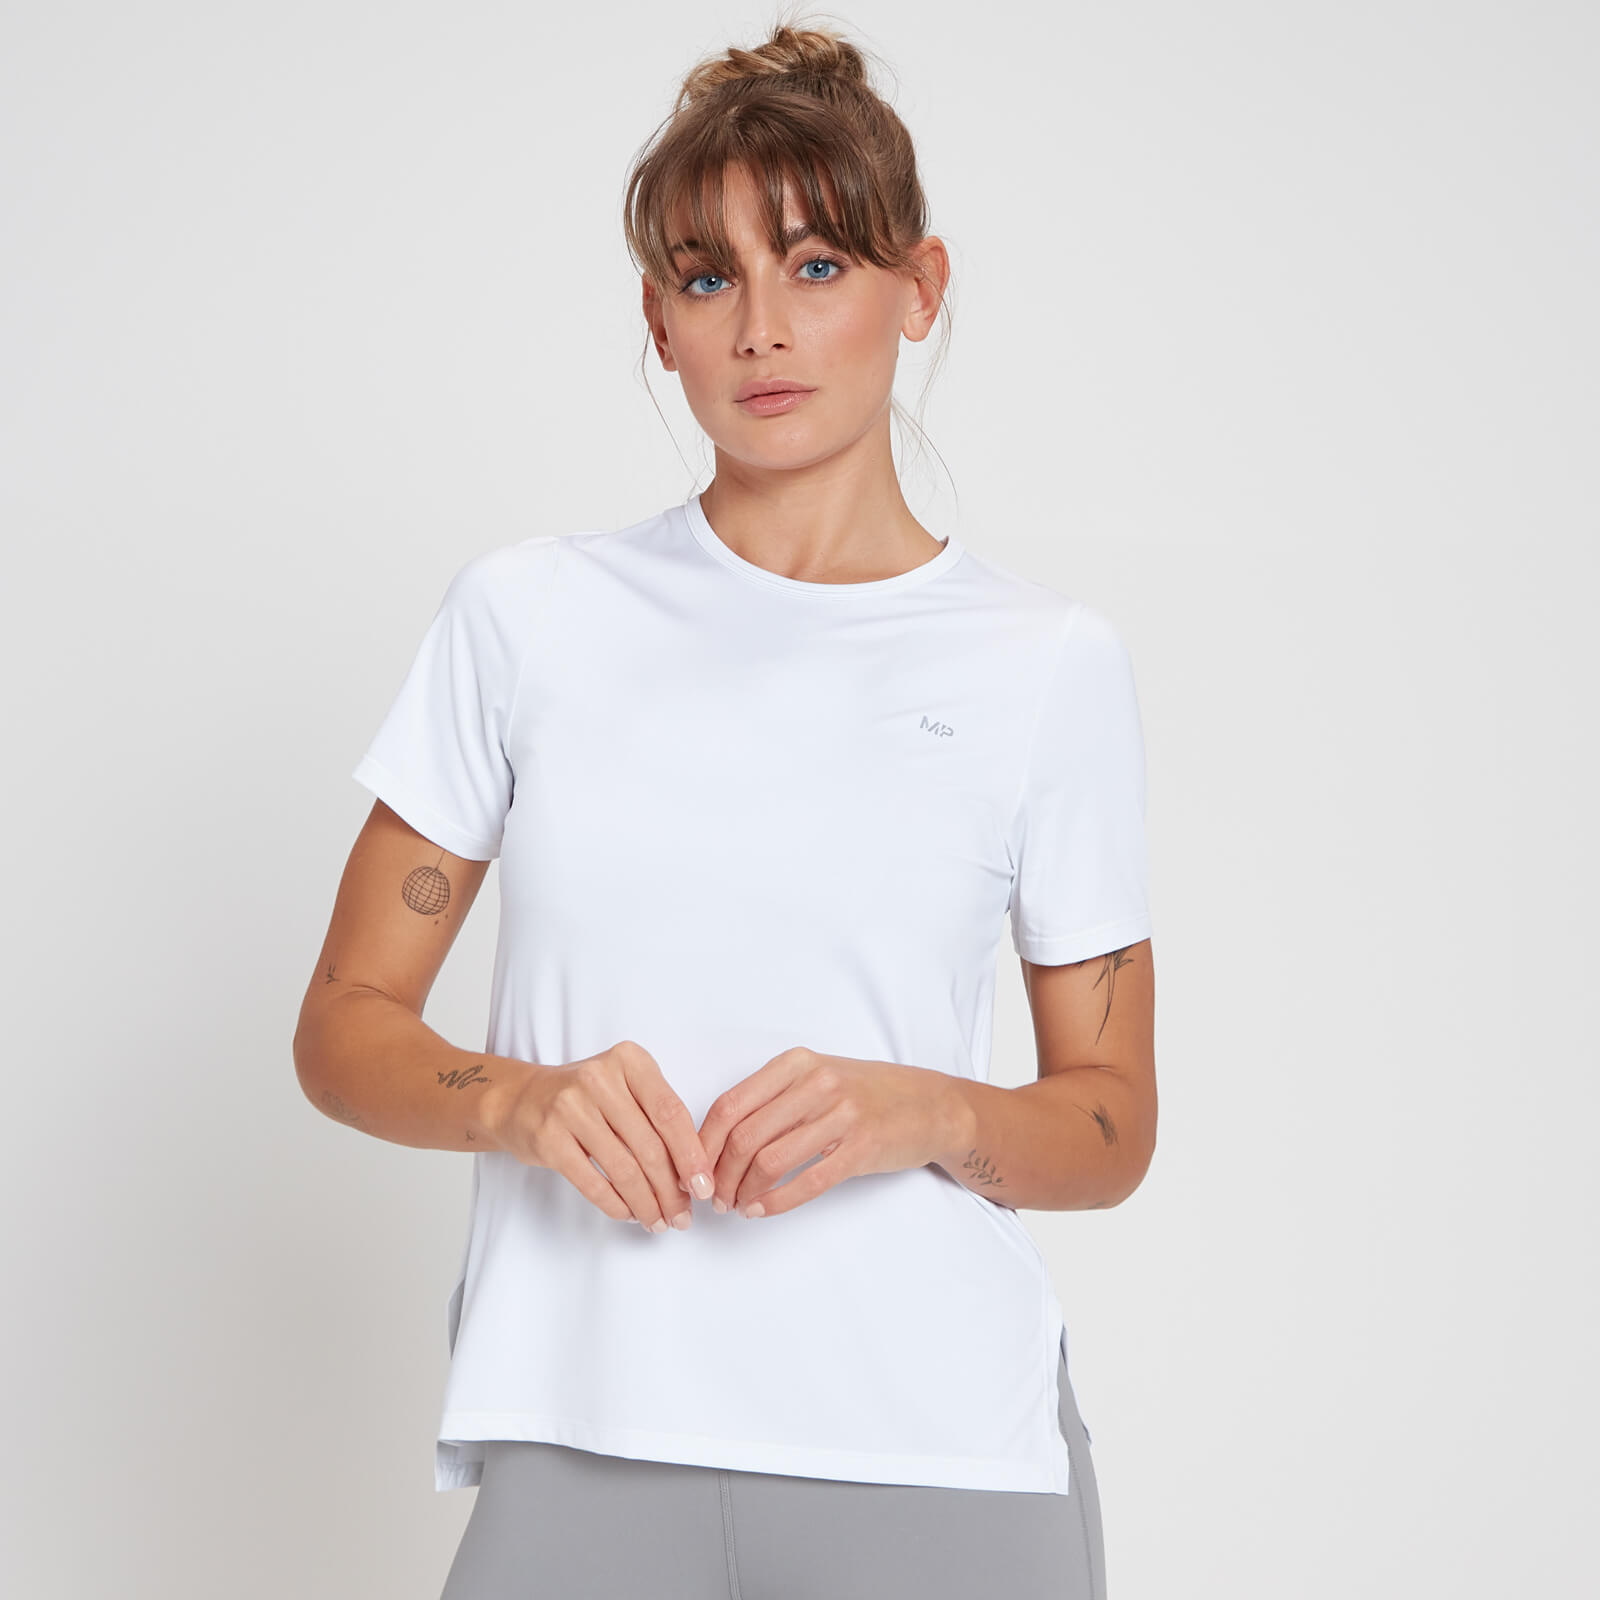 MP Women's Velocity T-Shirt - White  - XL